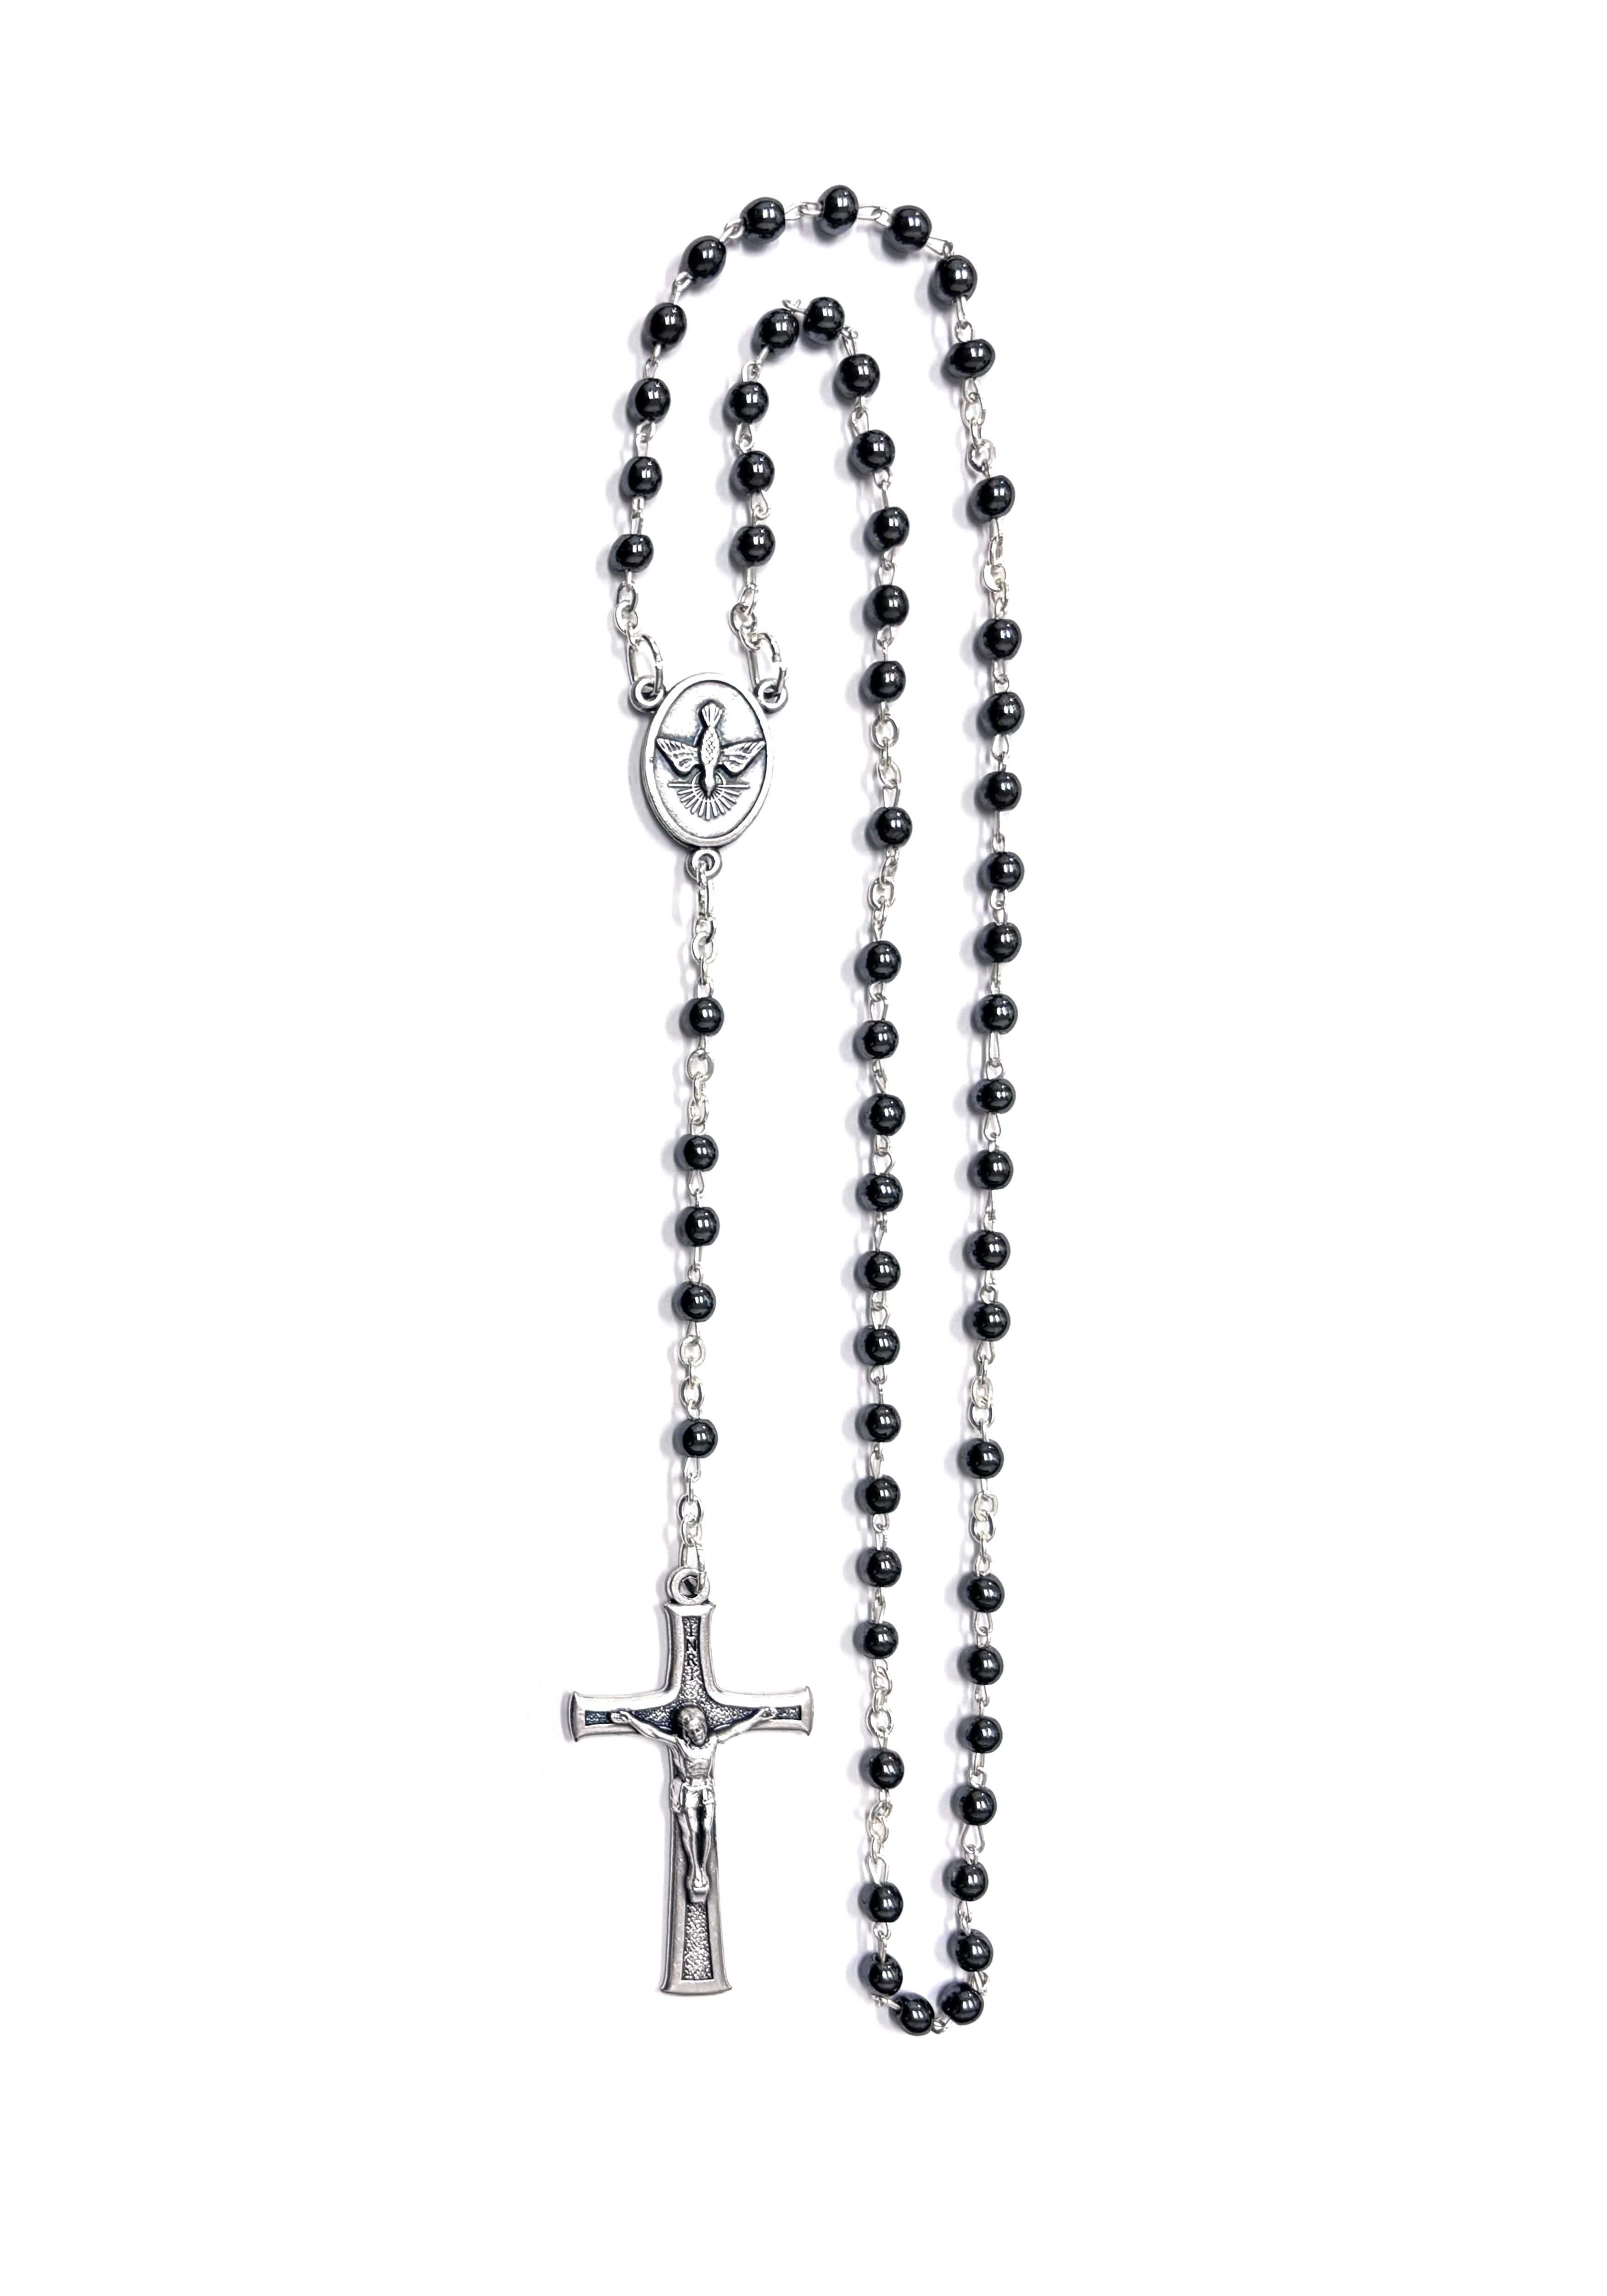 Holy Spirit and Holy Family hematite stone rosary